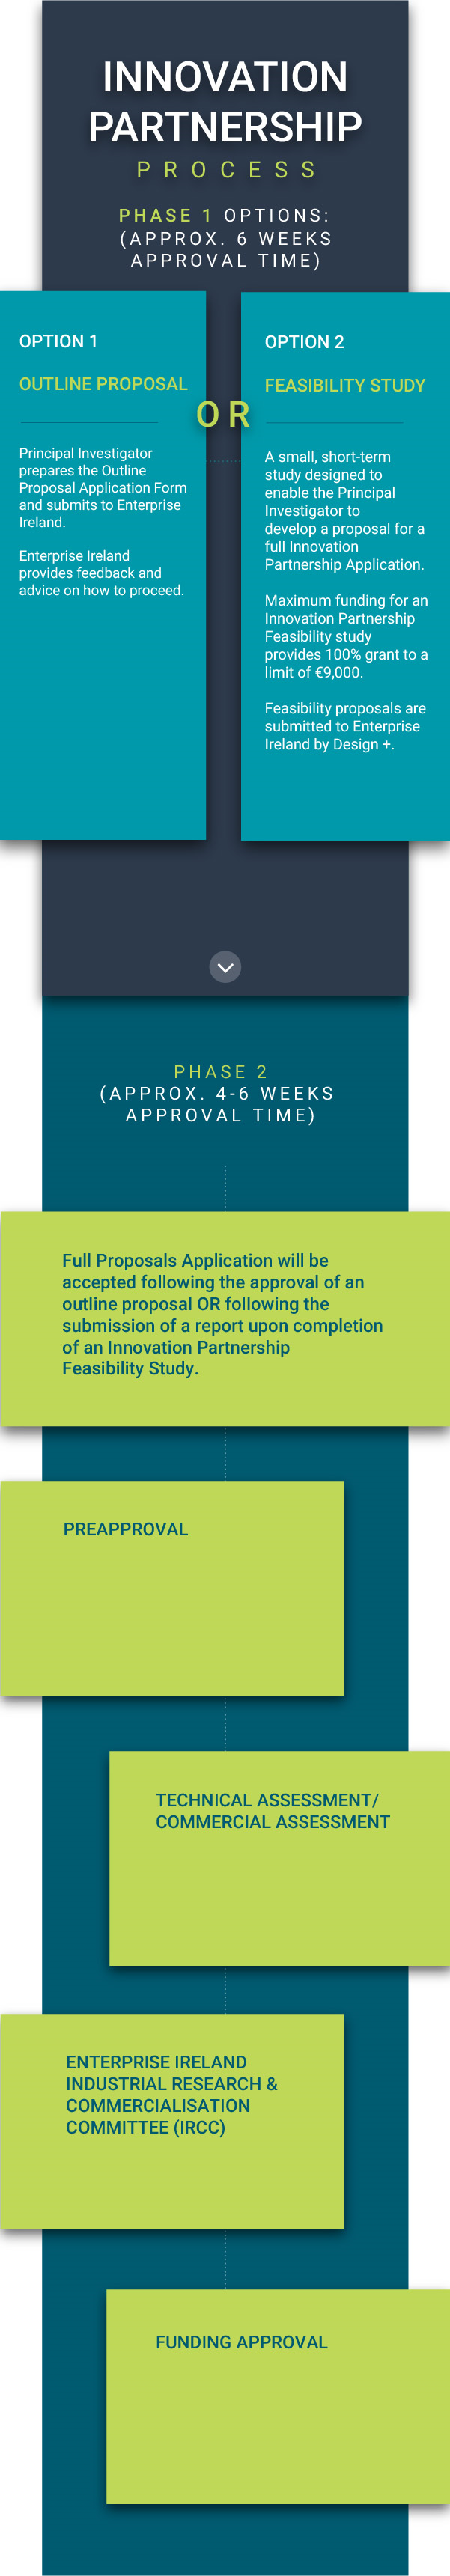 Innovation Partnership Process